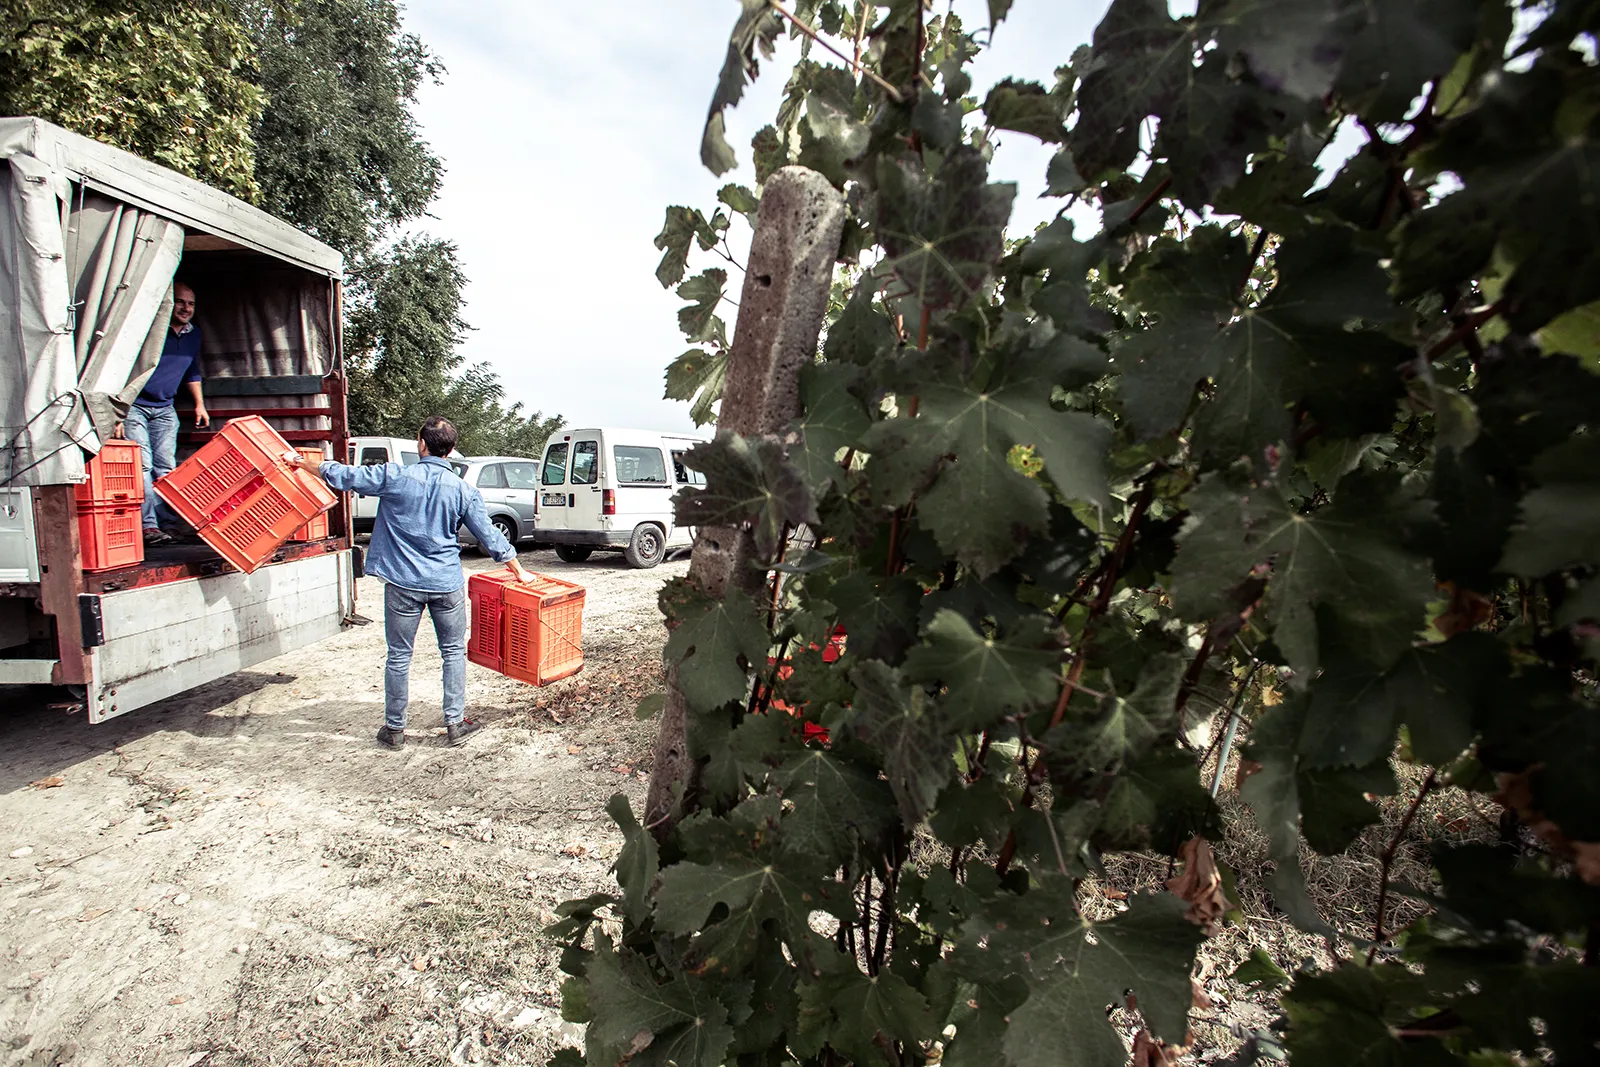 Workers at work on the Poderi Fogliati vineyard.